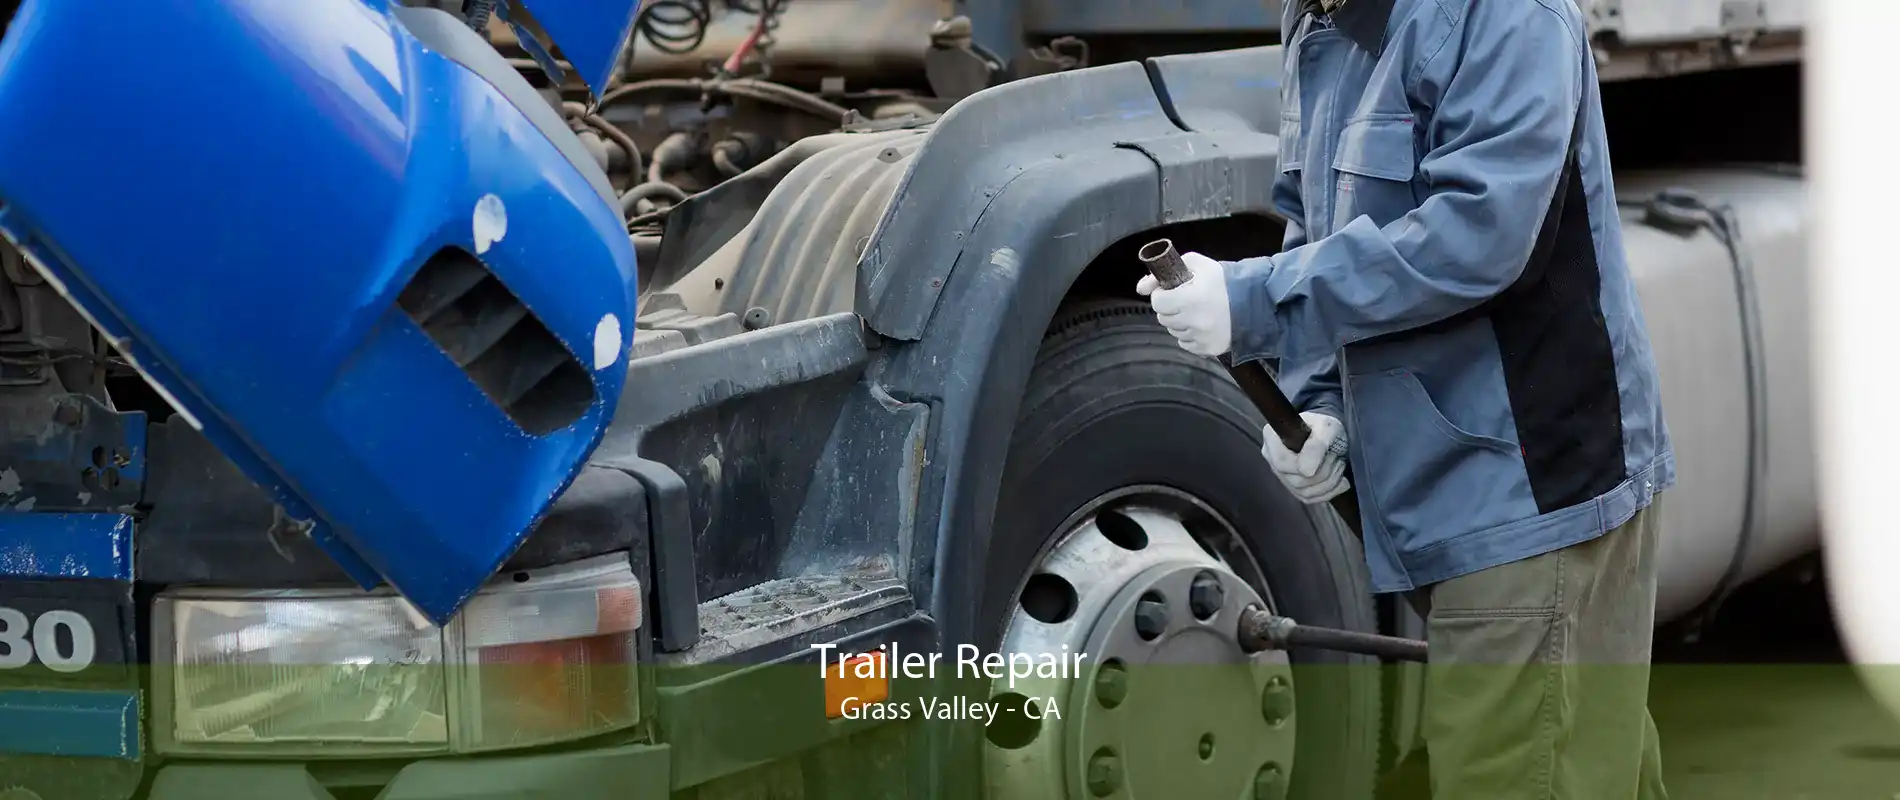 Trailer Repair Grass Valley - CA